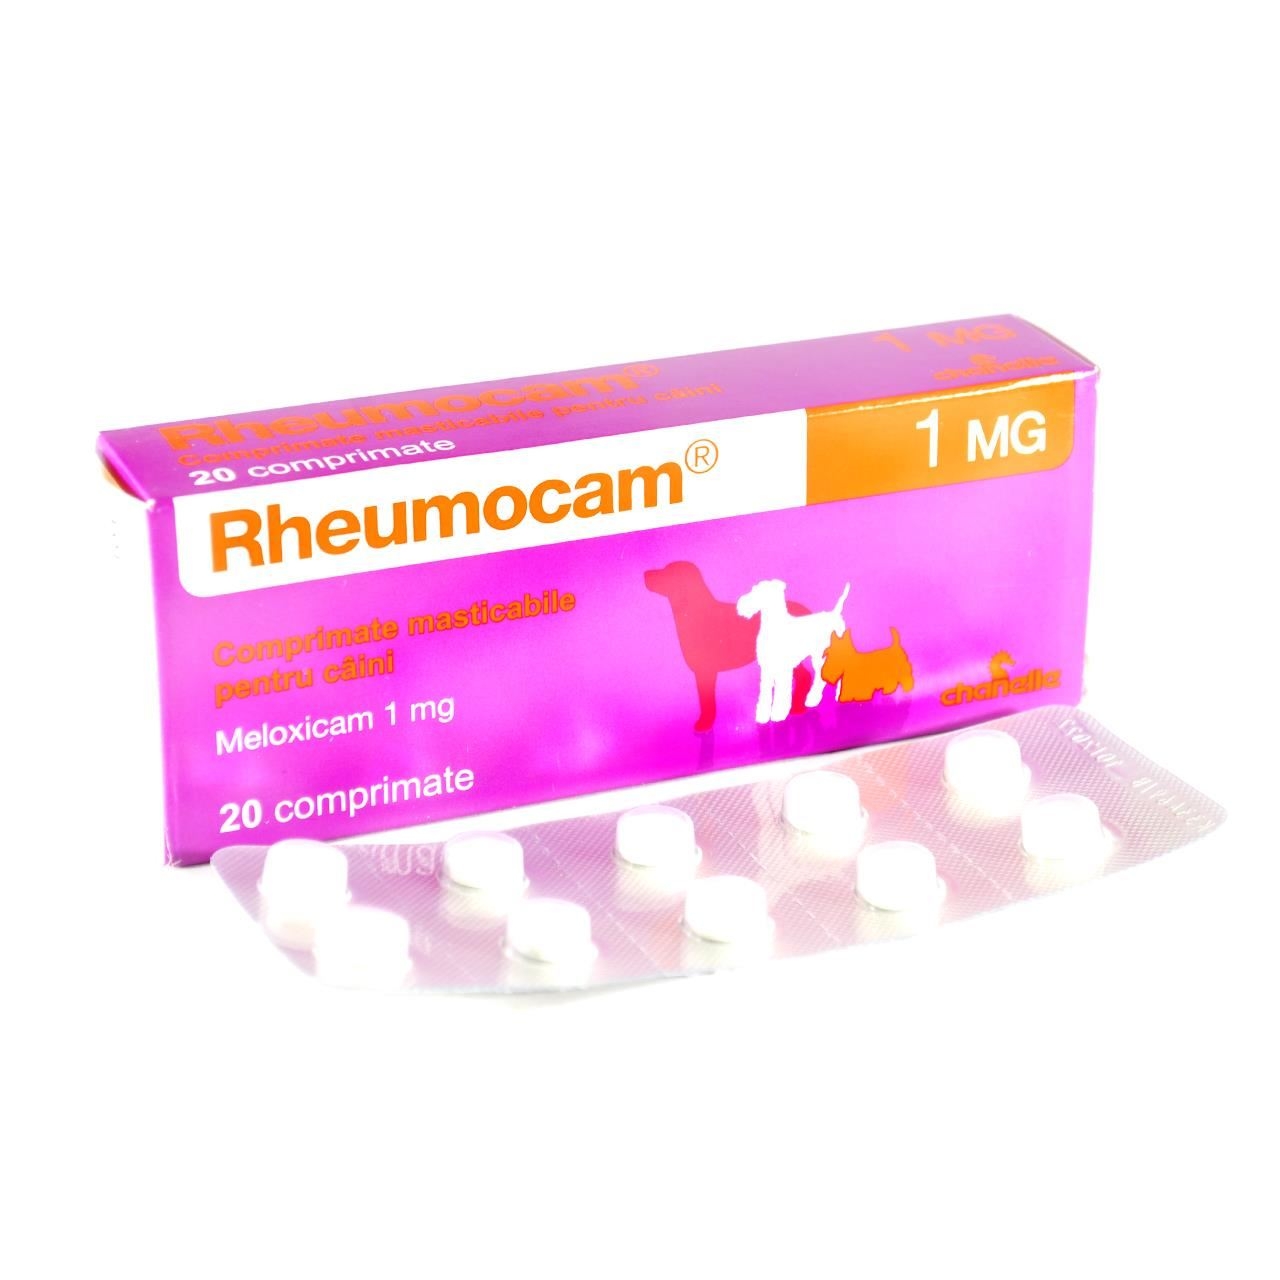 Rheumocam, 1 mg/ 20 comprimate petmart